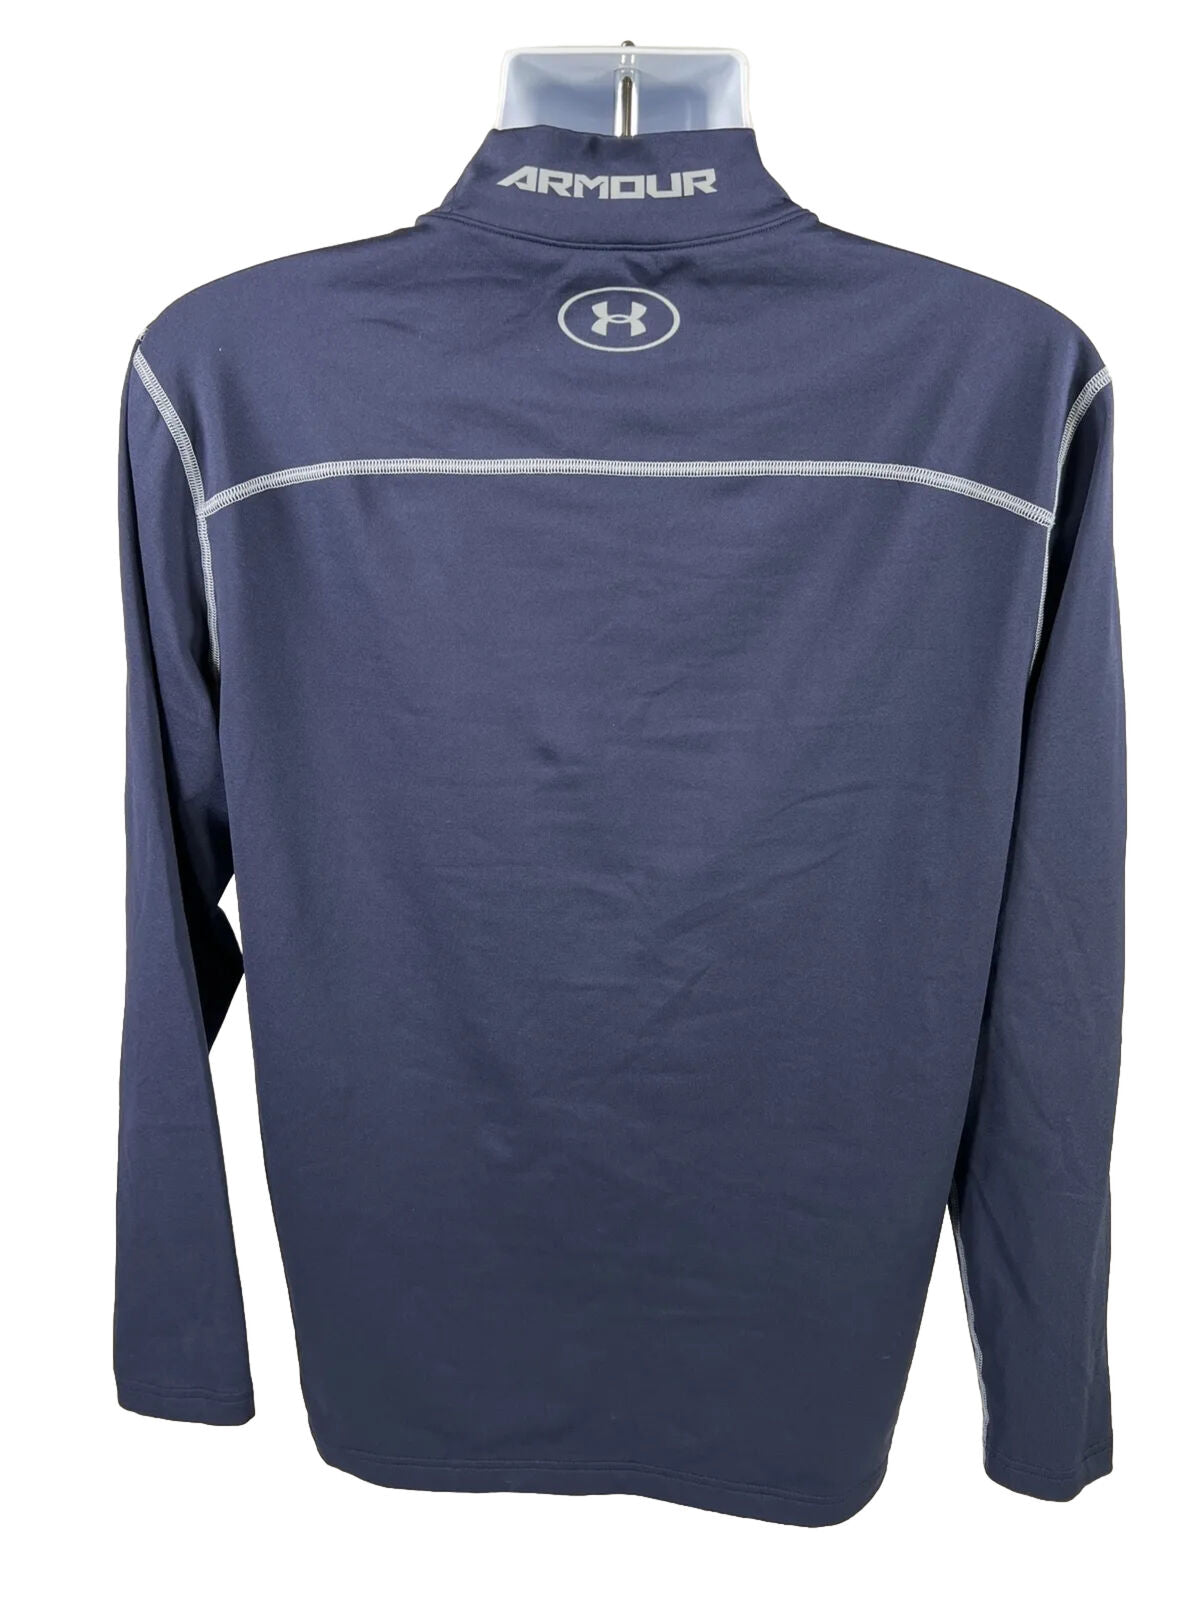 Under Armour Men's Blue Long Sleeve Athletic Compression Shirt - 2XL